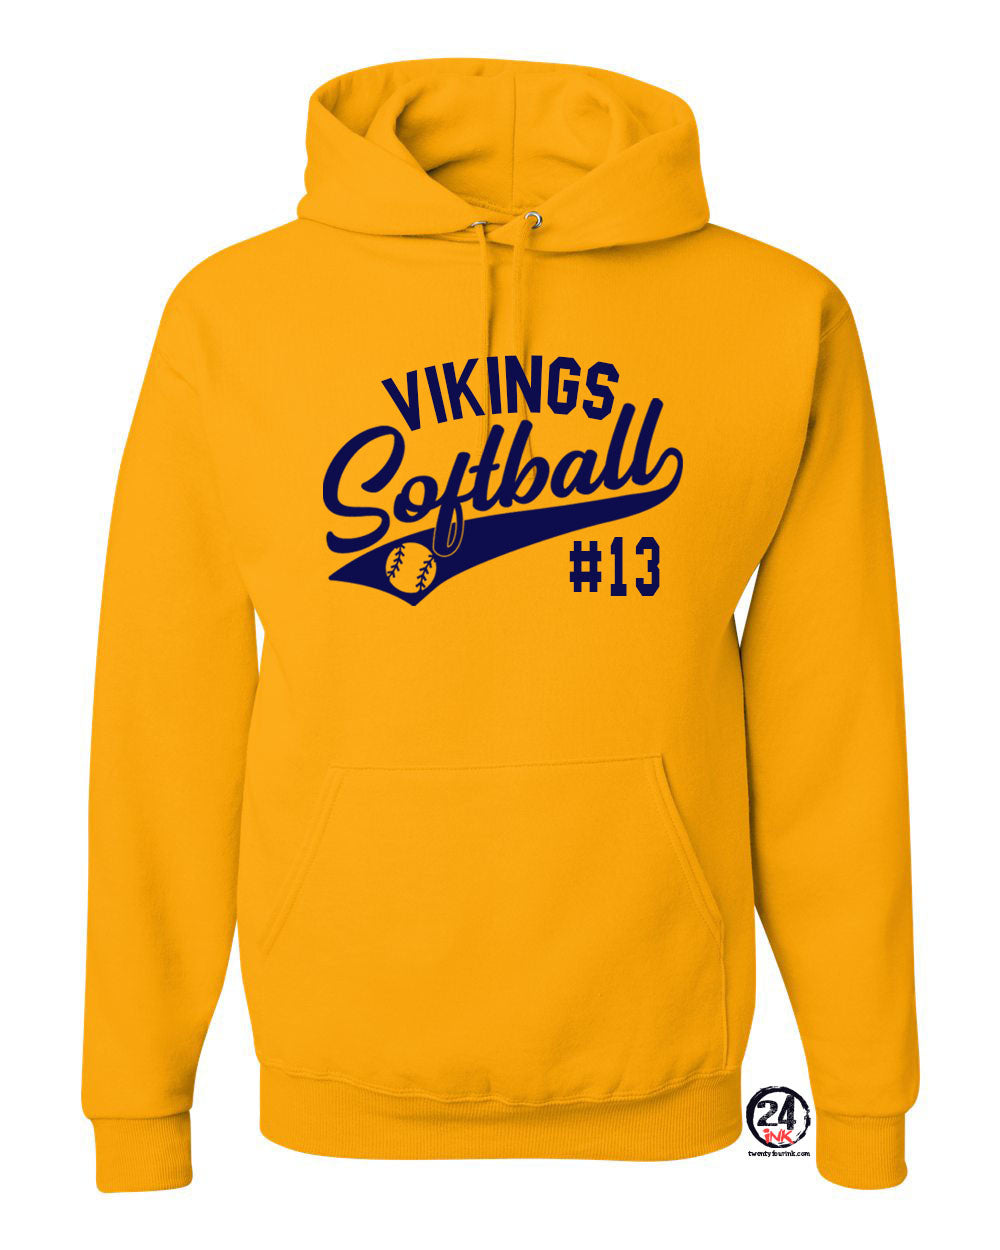 Gold Vikings Softball Hooded Sweatshirt